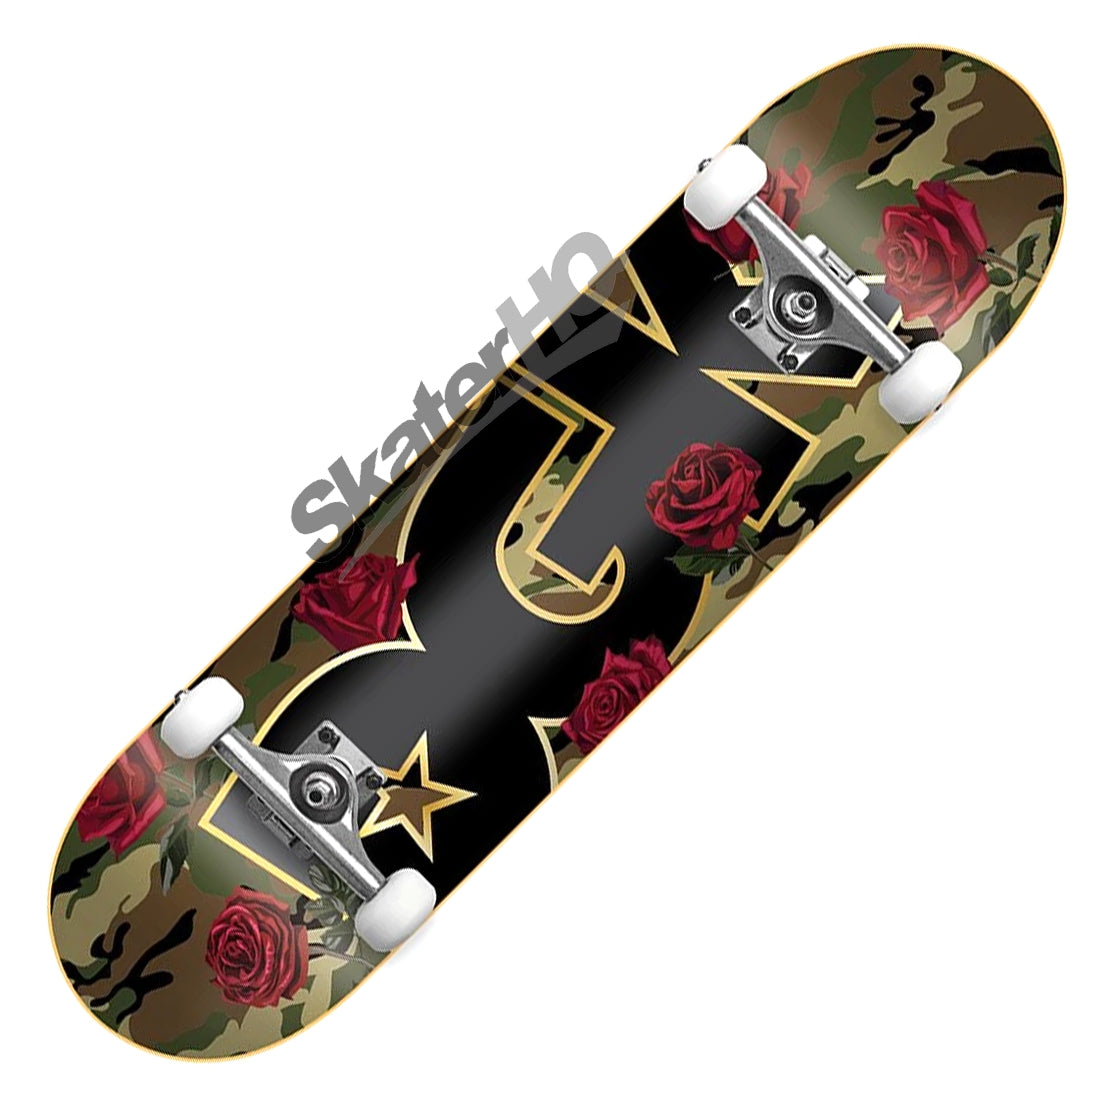 DGK Romance 7.75 Complete - Camo Skateboard Completes Modern Street